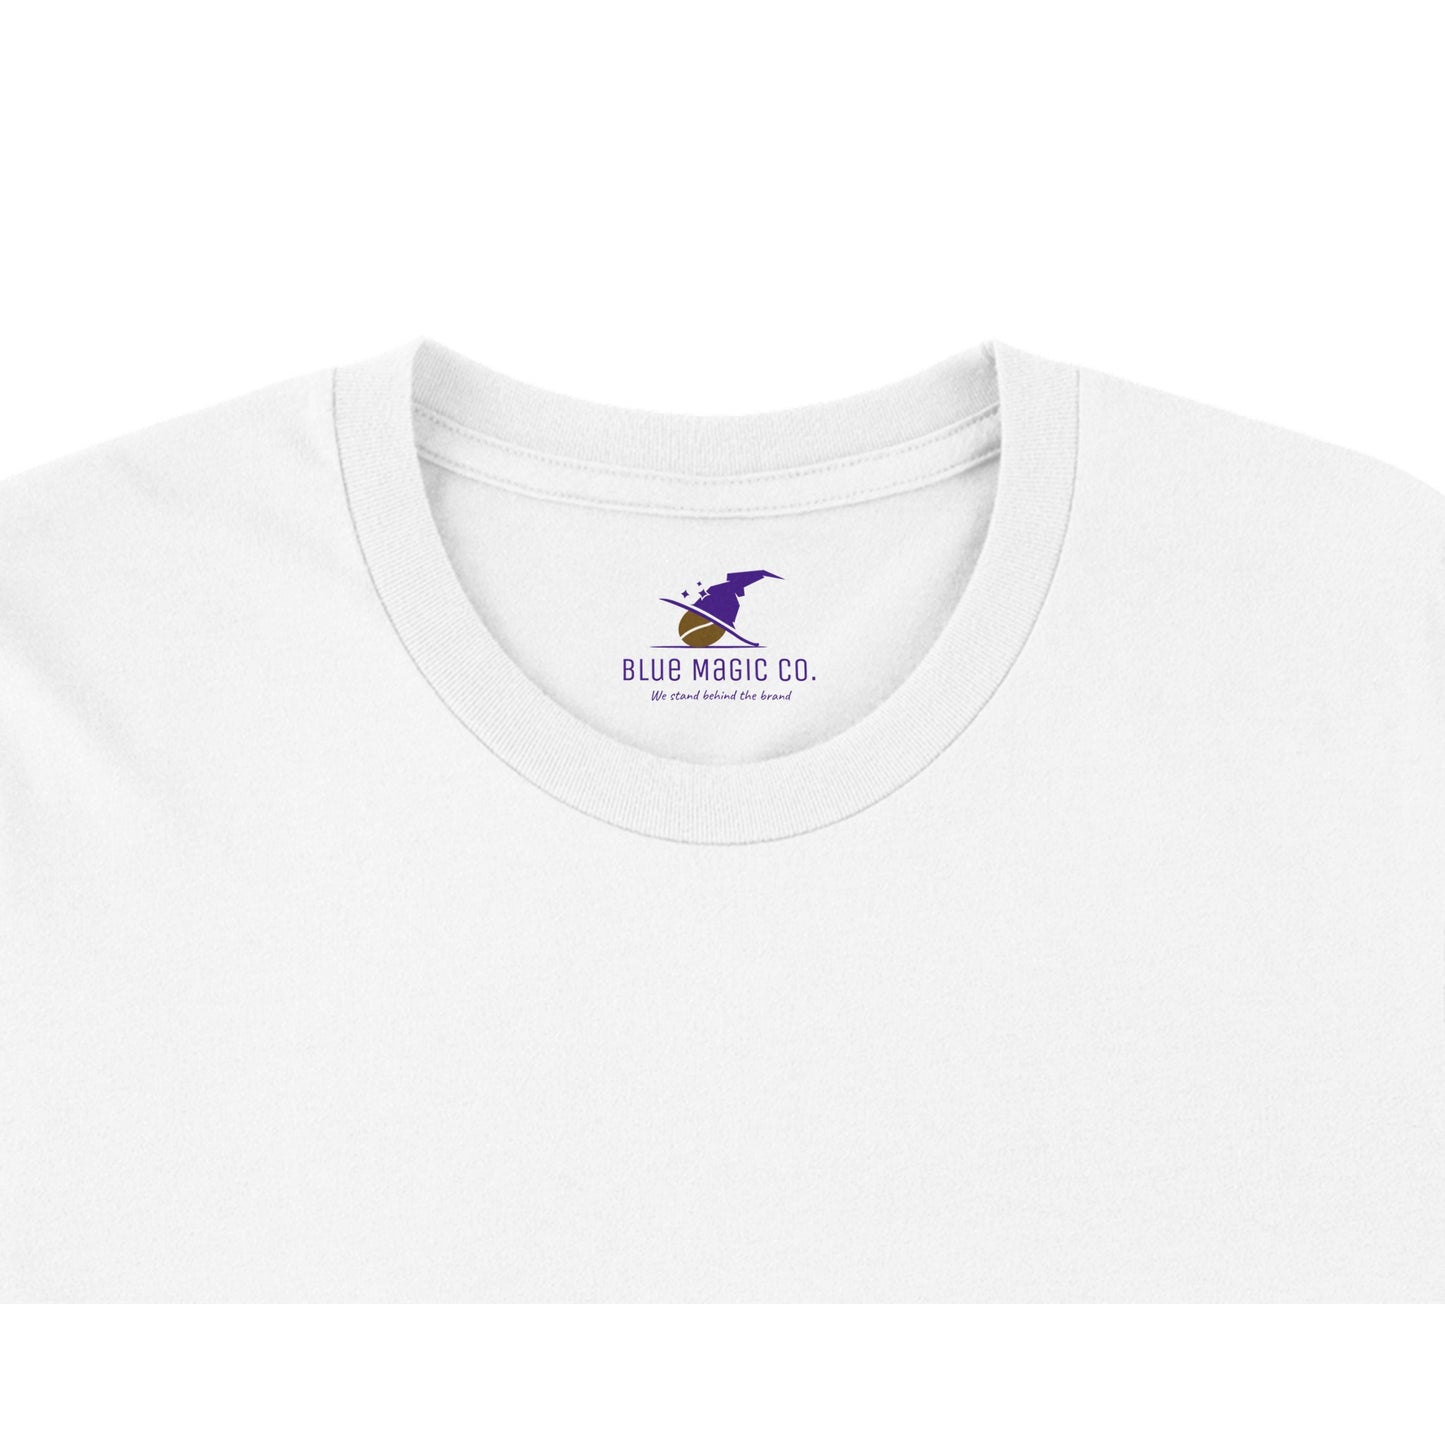 Premium Unisex "Coffee Dog" T-shirt